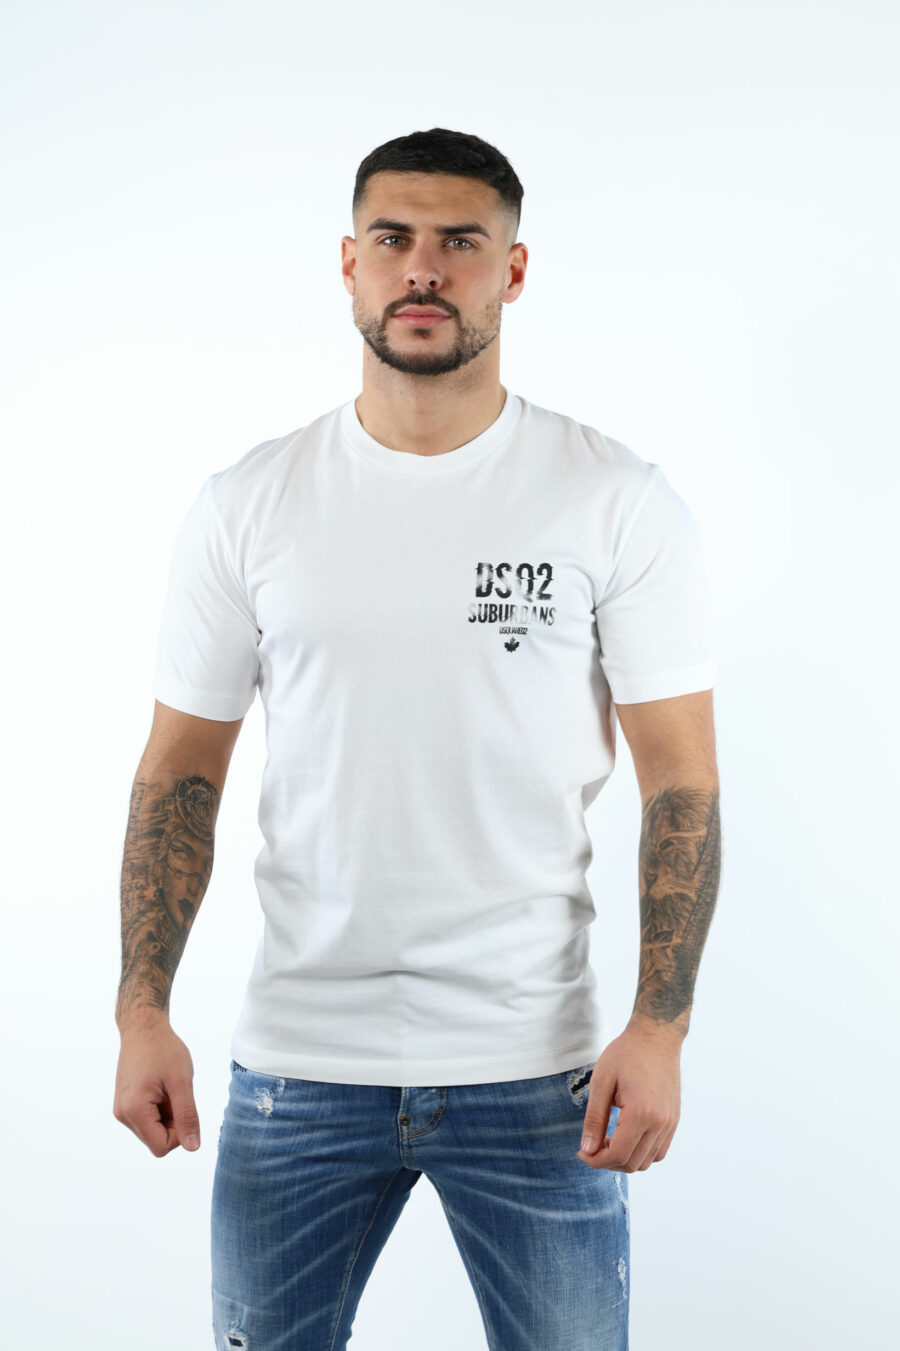 T-shirt branca com minilogo "suburbans" preto - 106623